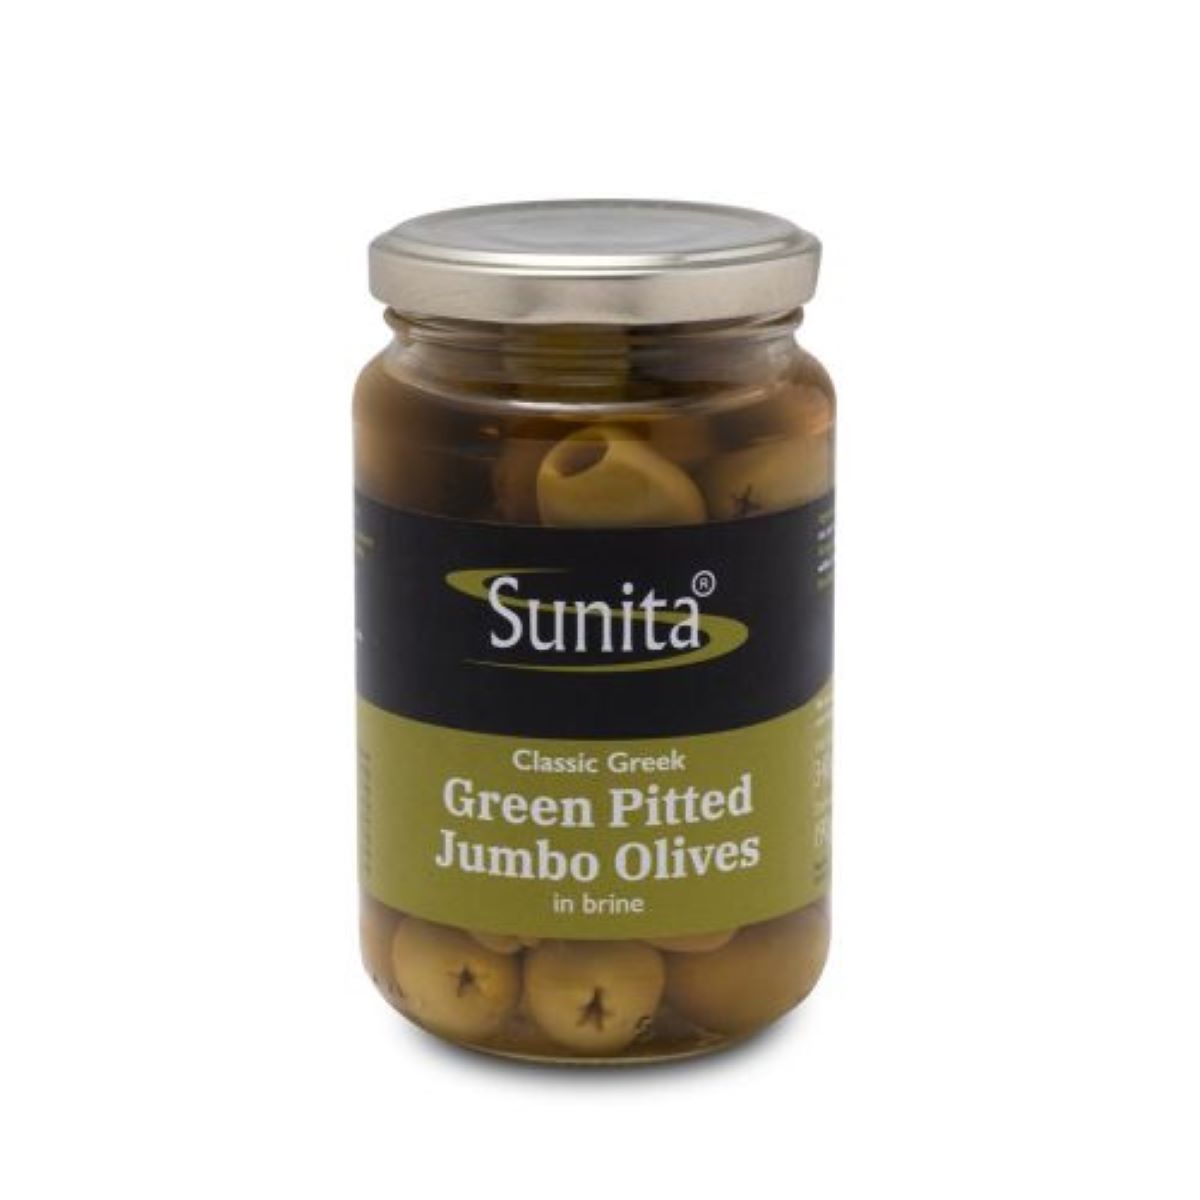 Sunita Green Pitted Jumbo Olives 340g